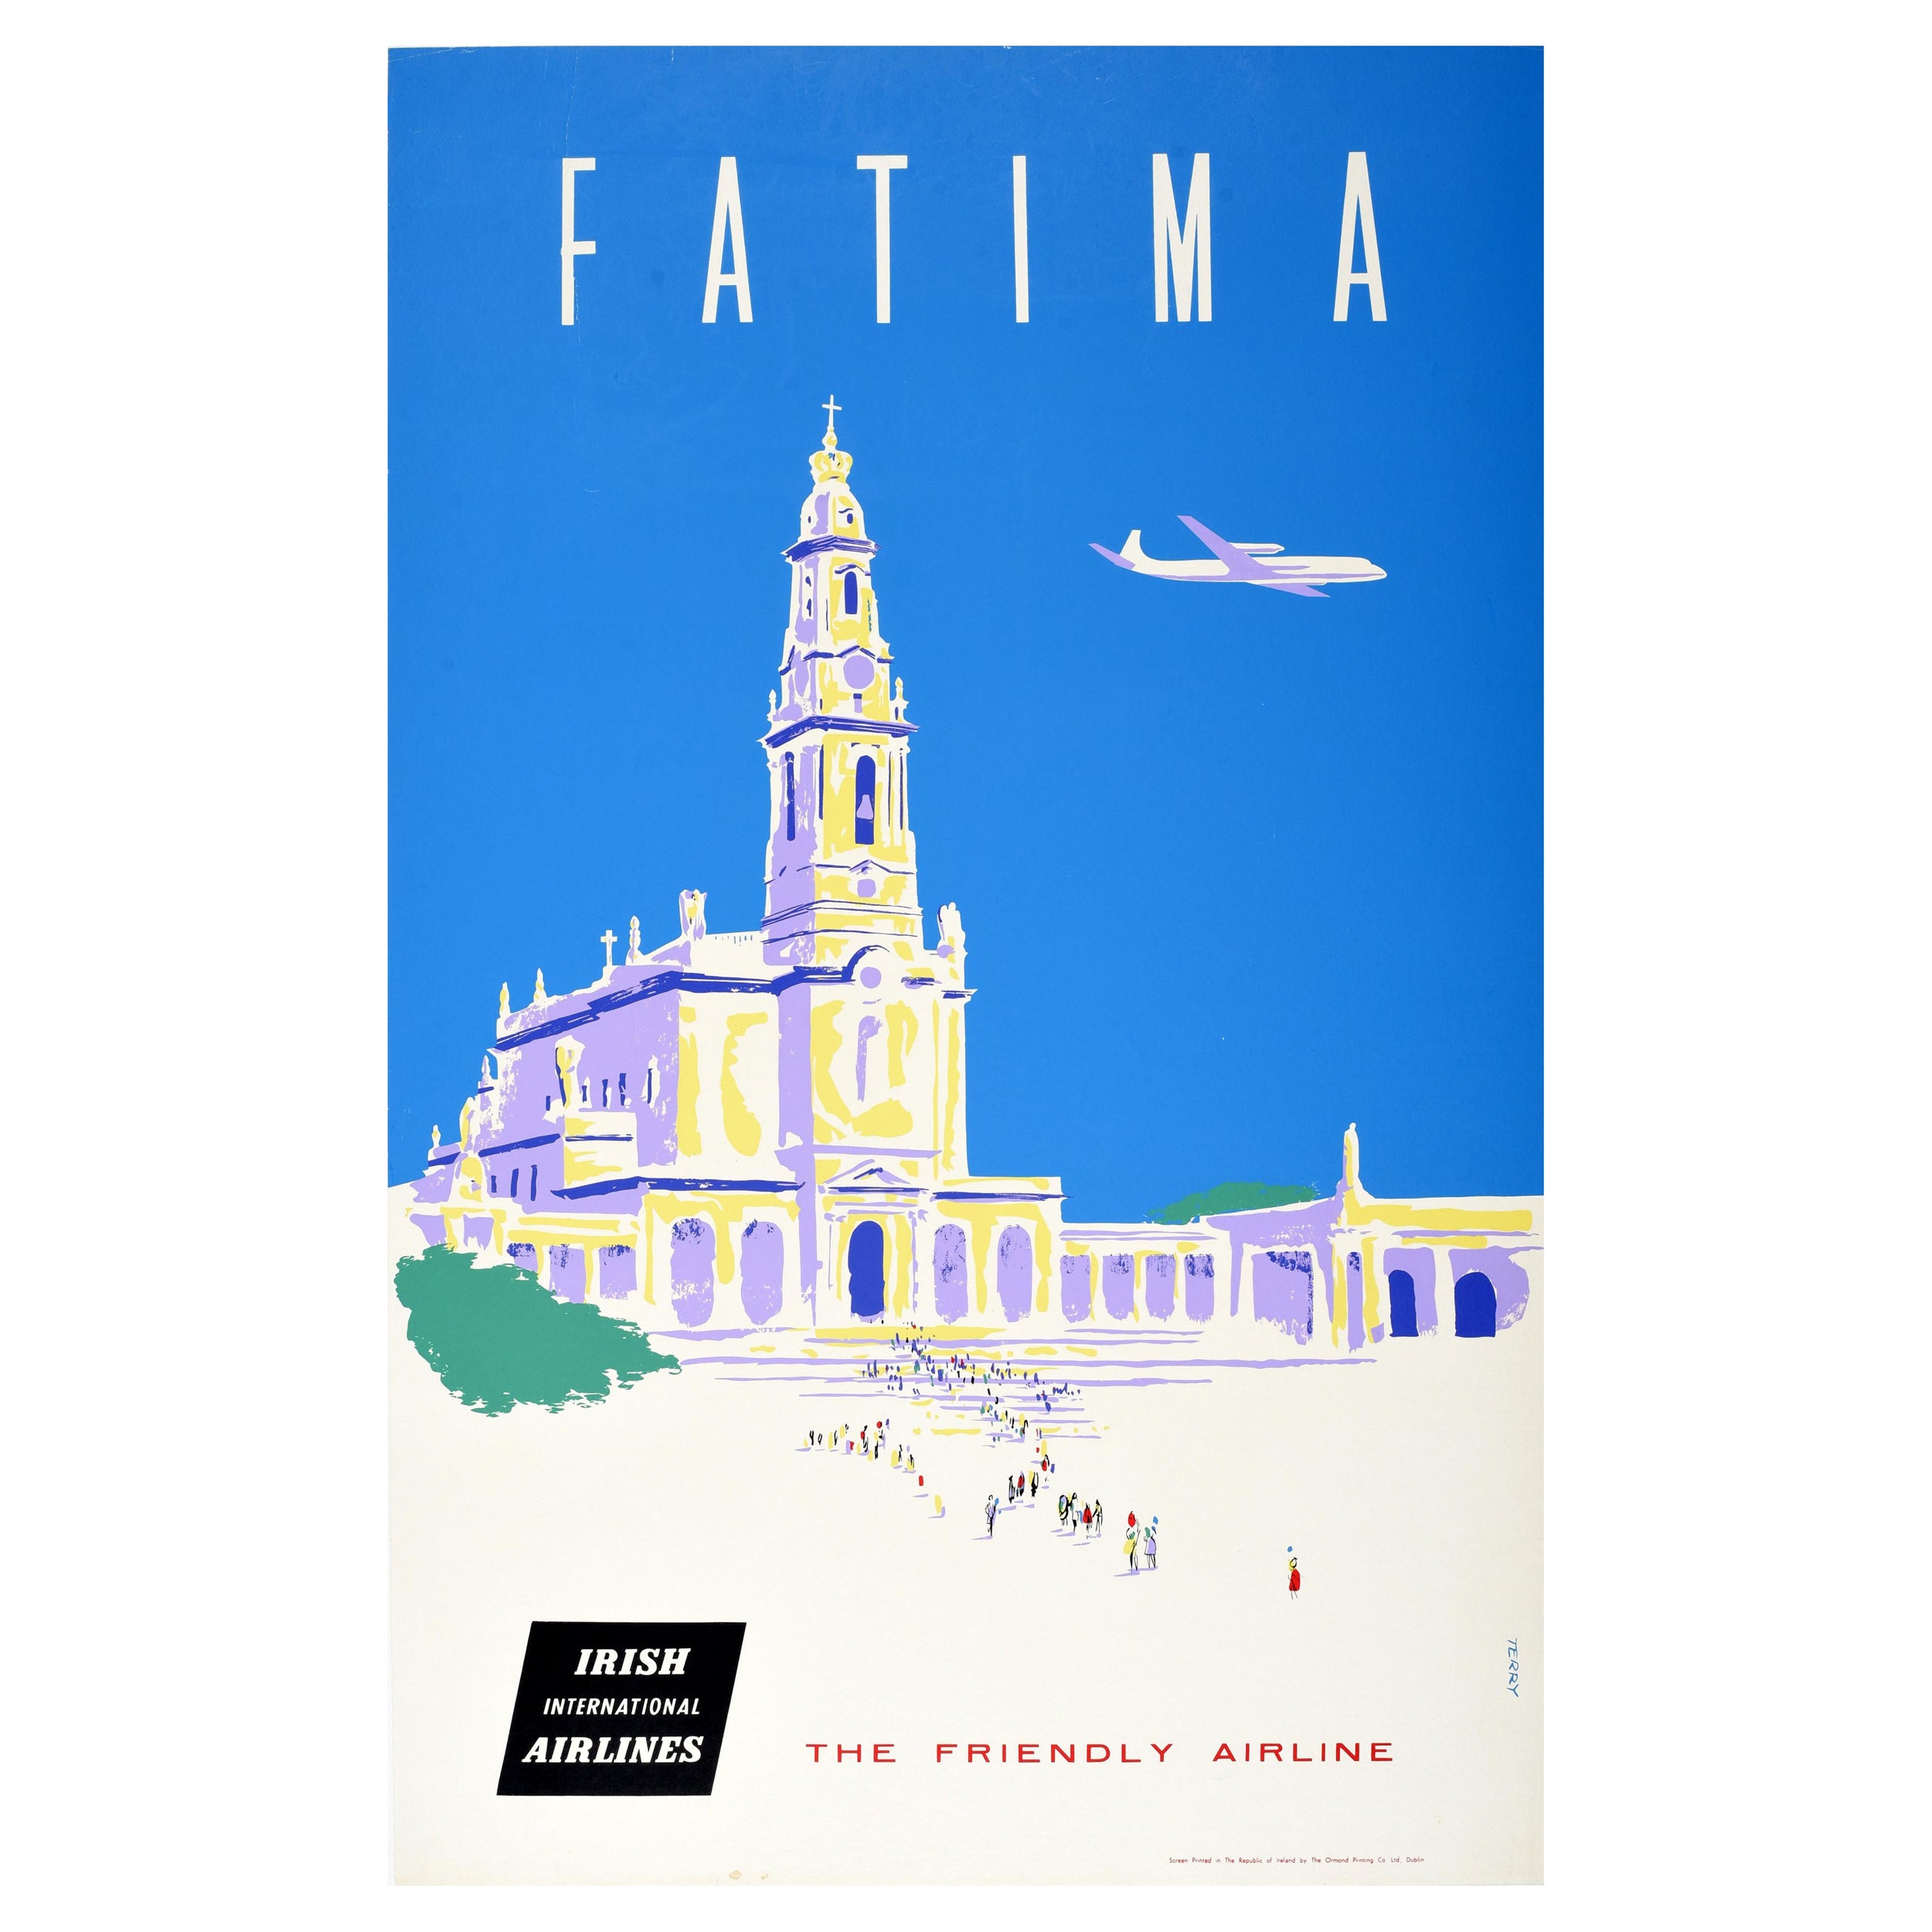 Affiche vintage originale de voyage Fatima, Portugal, Compagnie internationale irlandaise d'aviation en vente